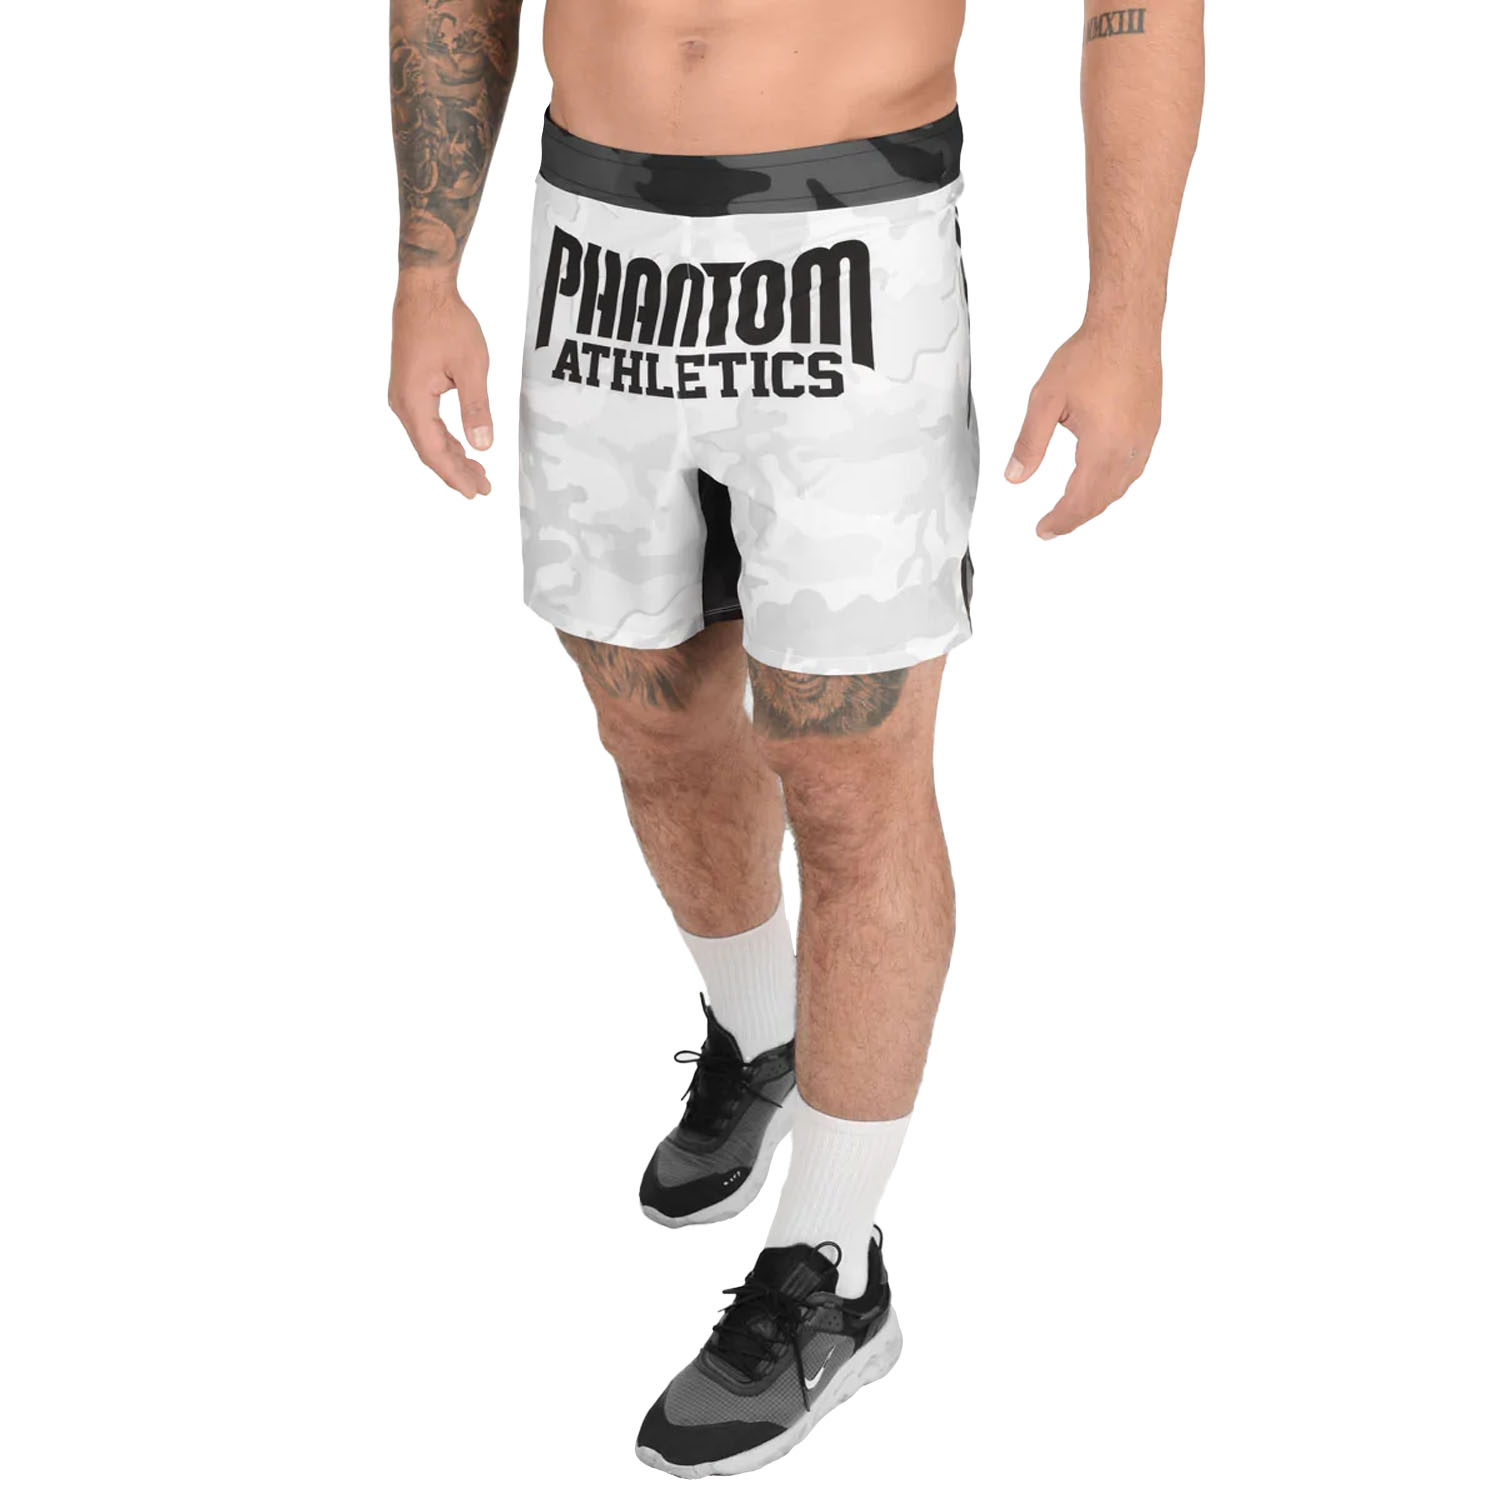 Phantom Athletics MMA Fight Shorts, Flex, S Boxed, white, XL